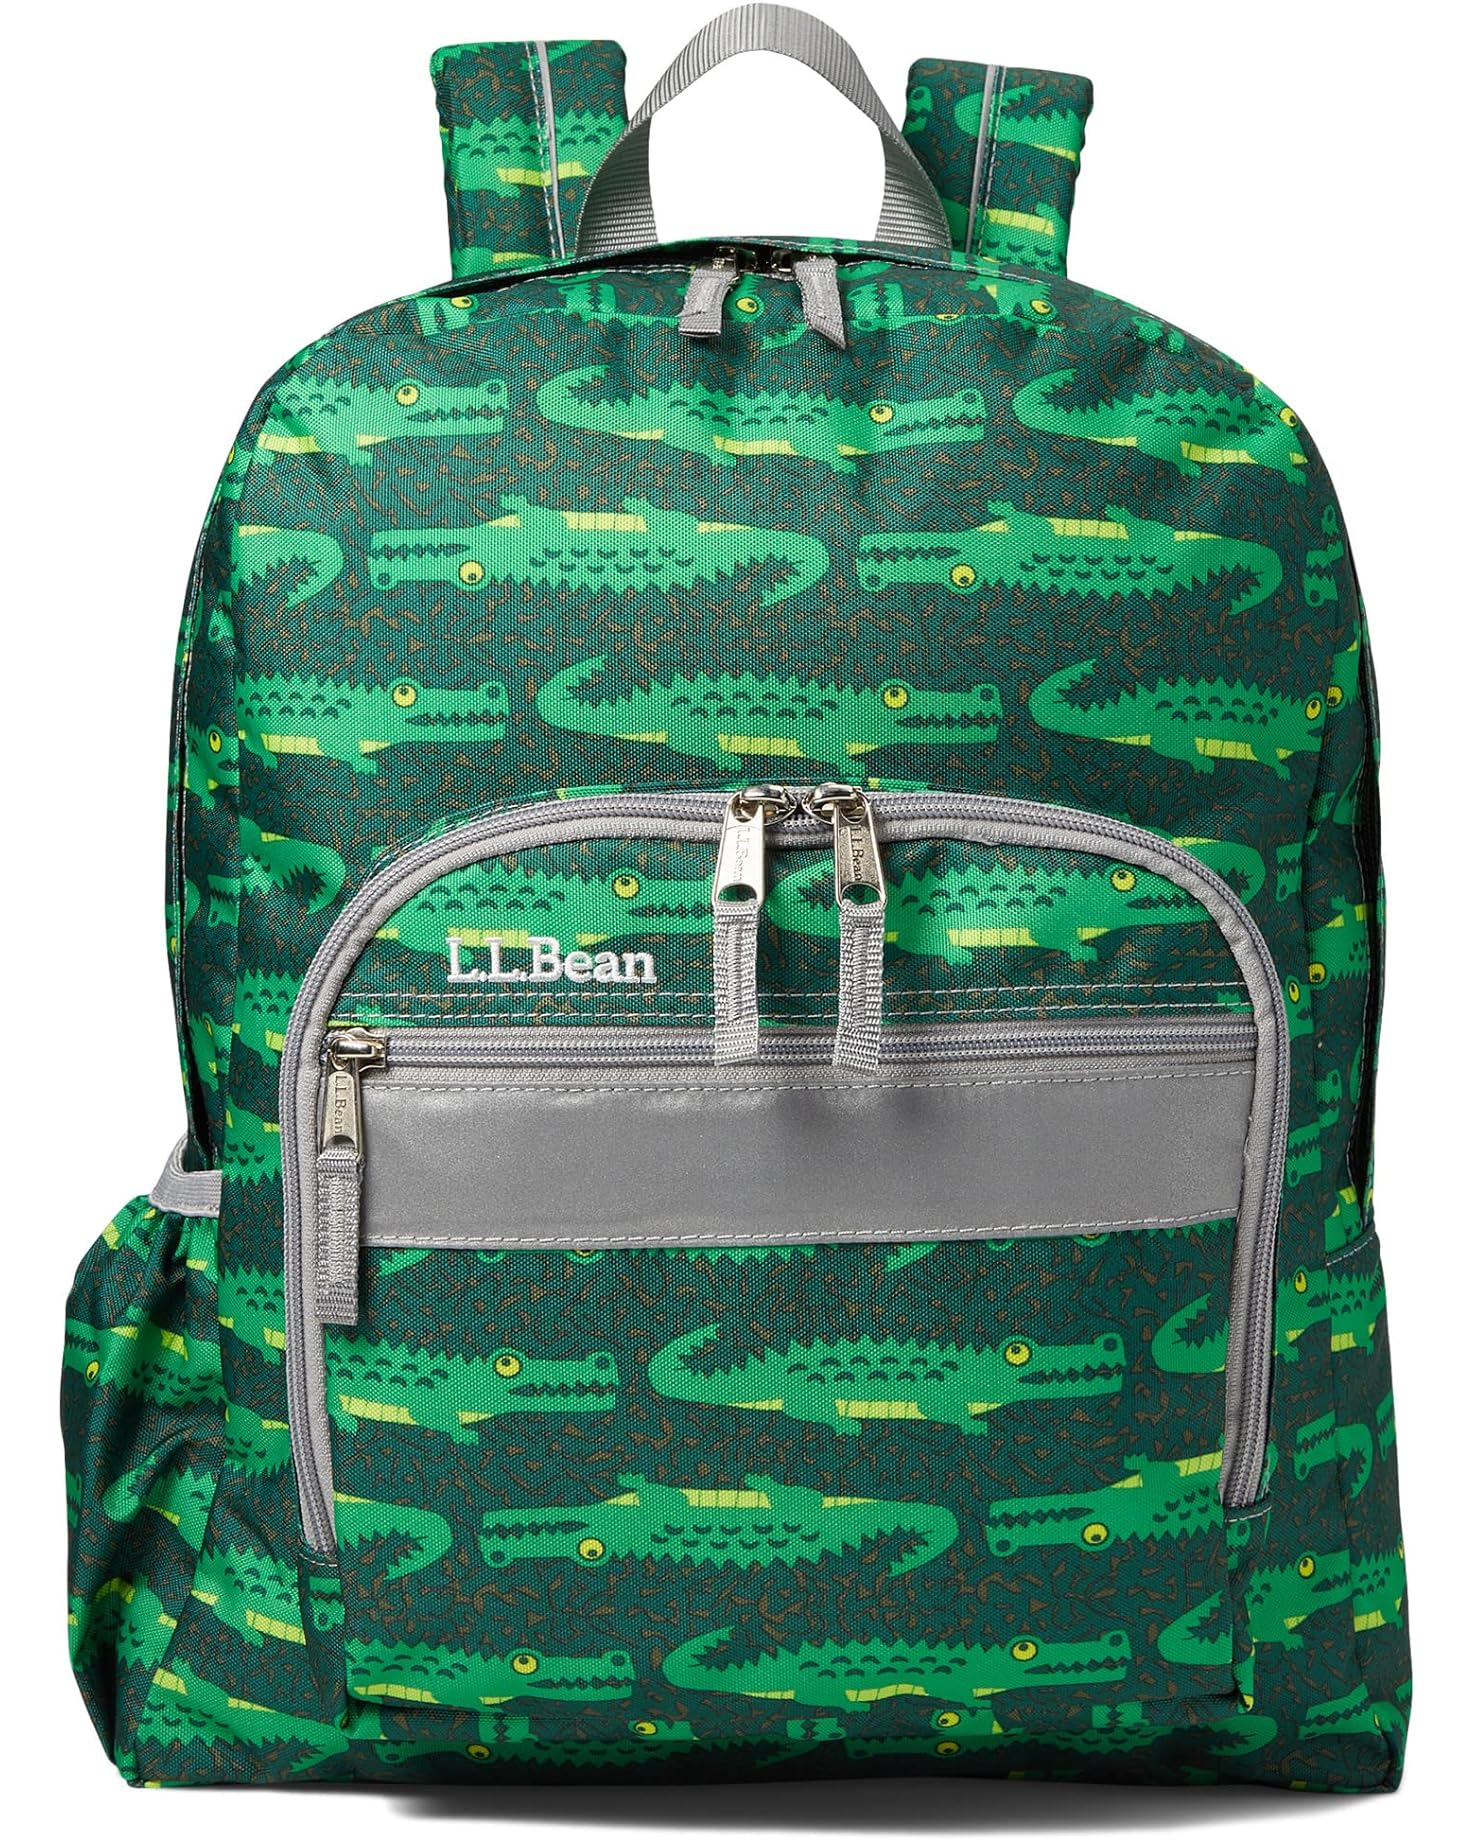 L.L.Bean Kids' Original Backpack (Green Gator) $15.18 + Free Shipping